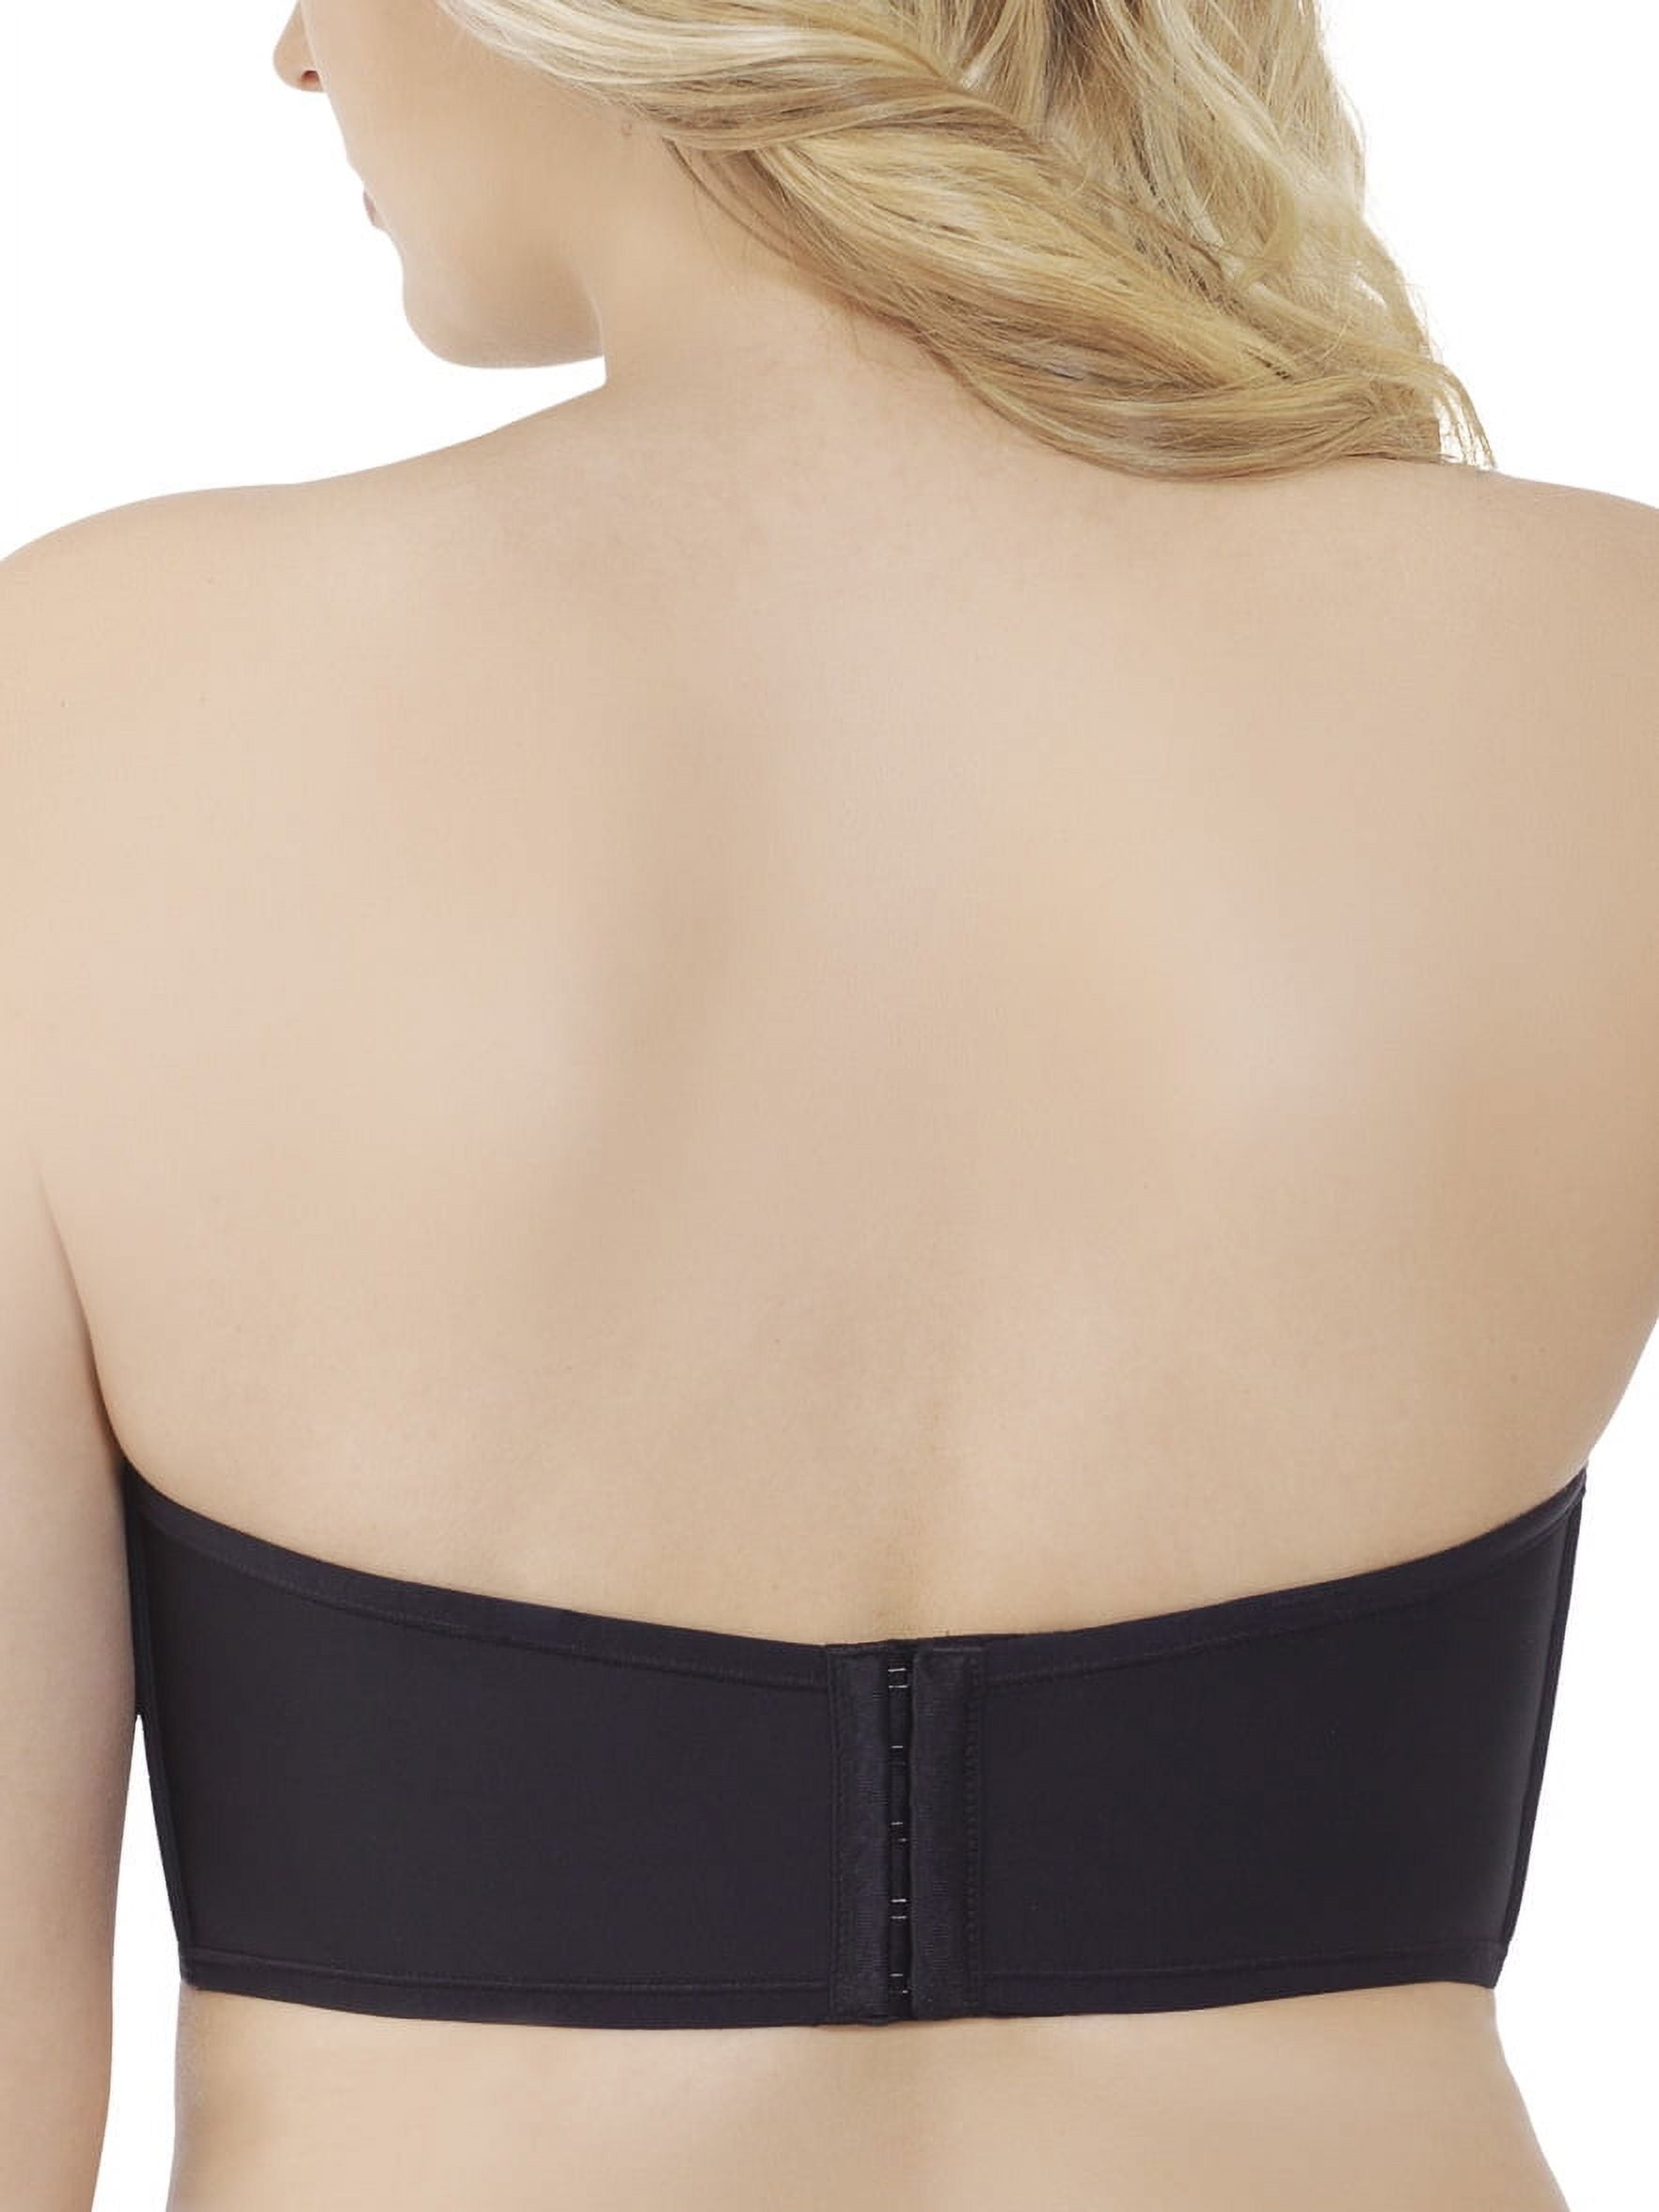 Vanity Fair beauty back strapless bra converts 5 ways NWT. 42C